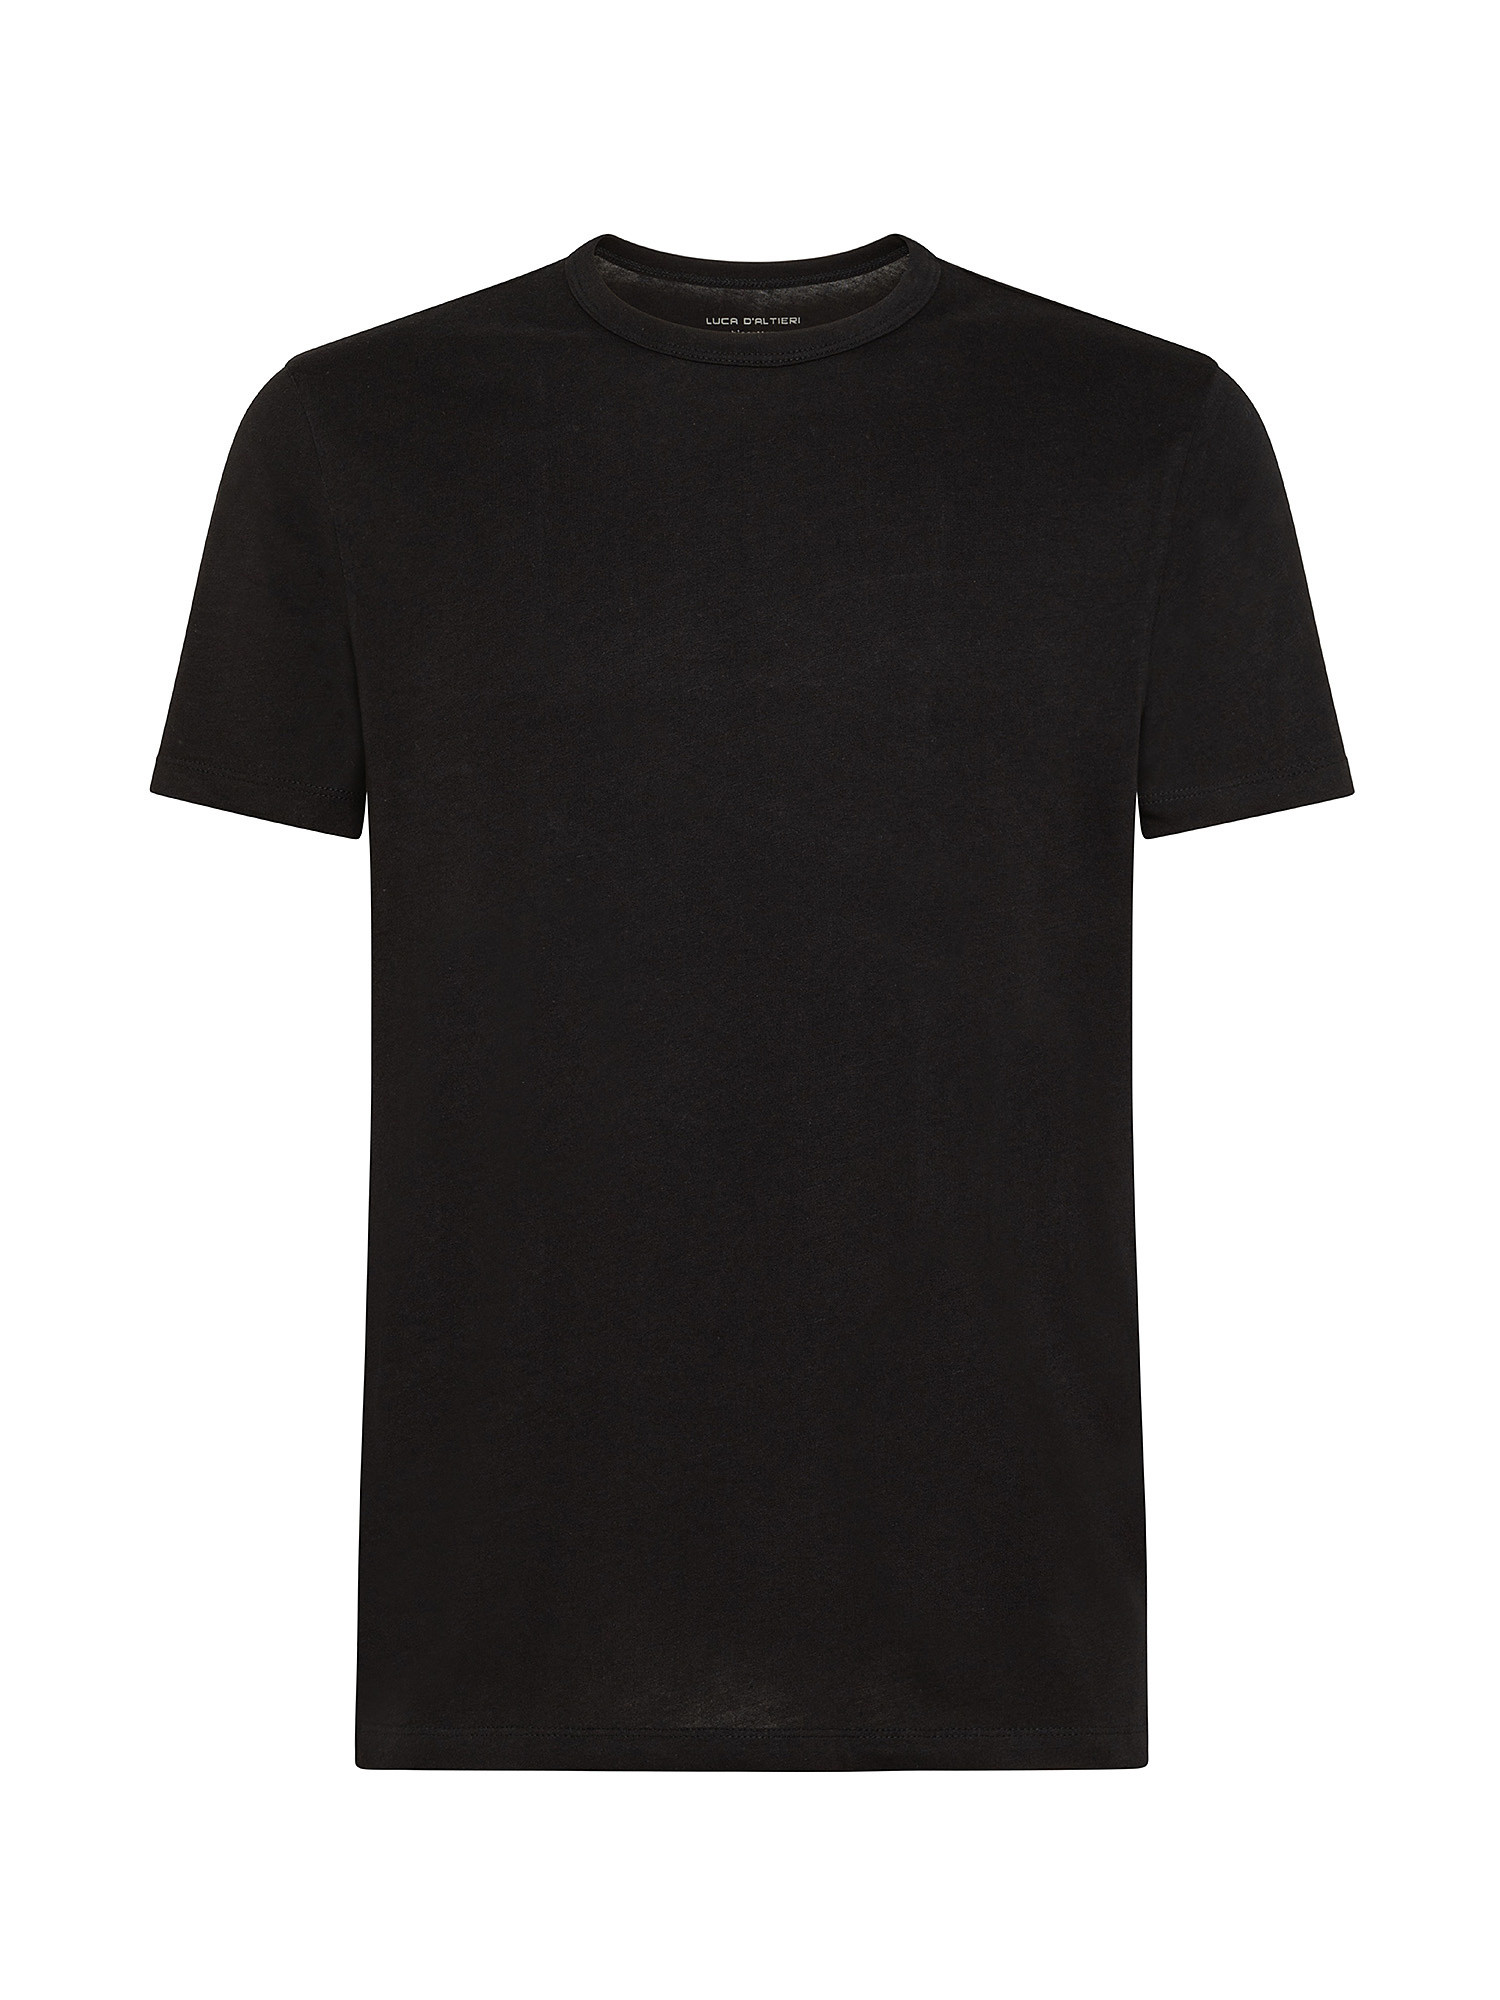 Luca D'Altieri - Set of 2 t-shirts, Black, large image number 0